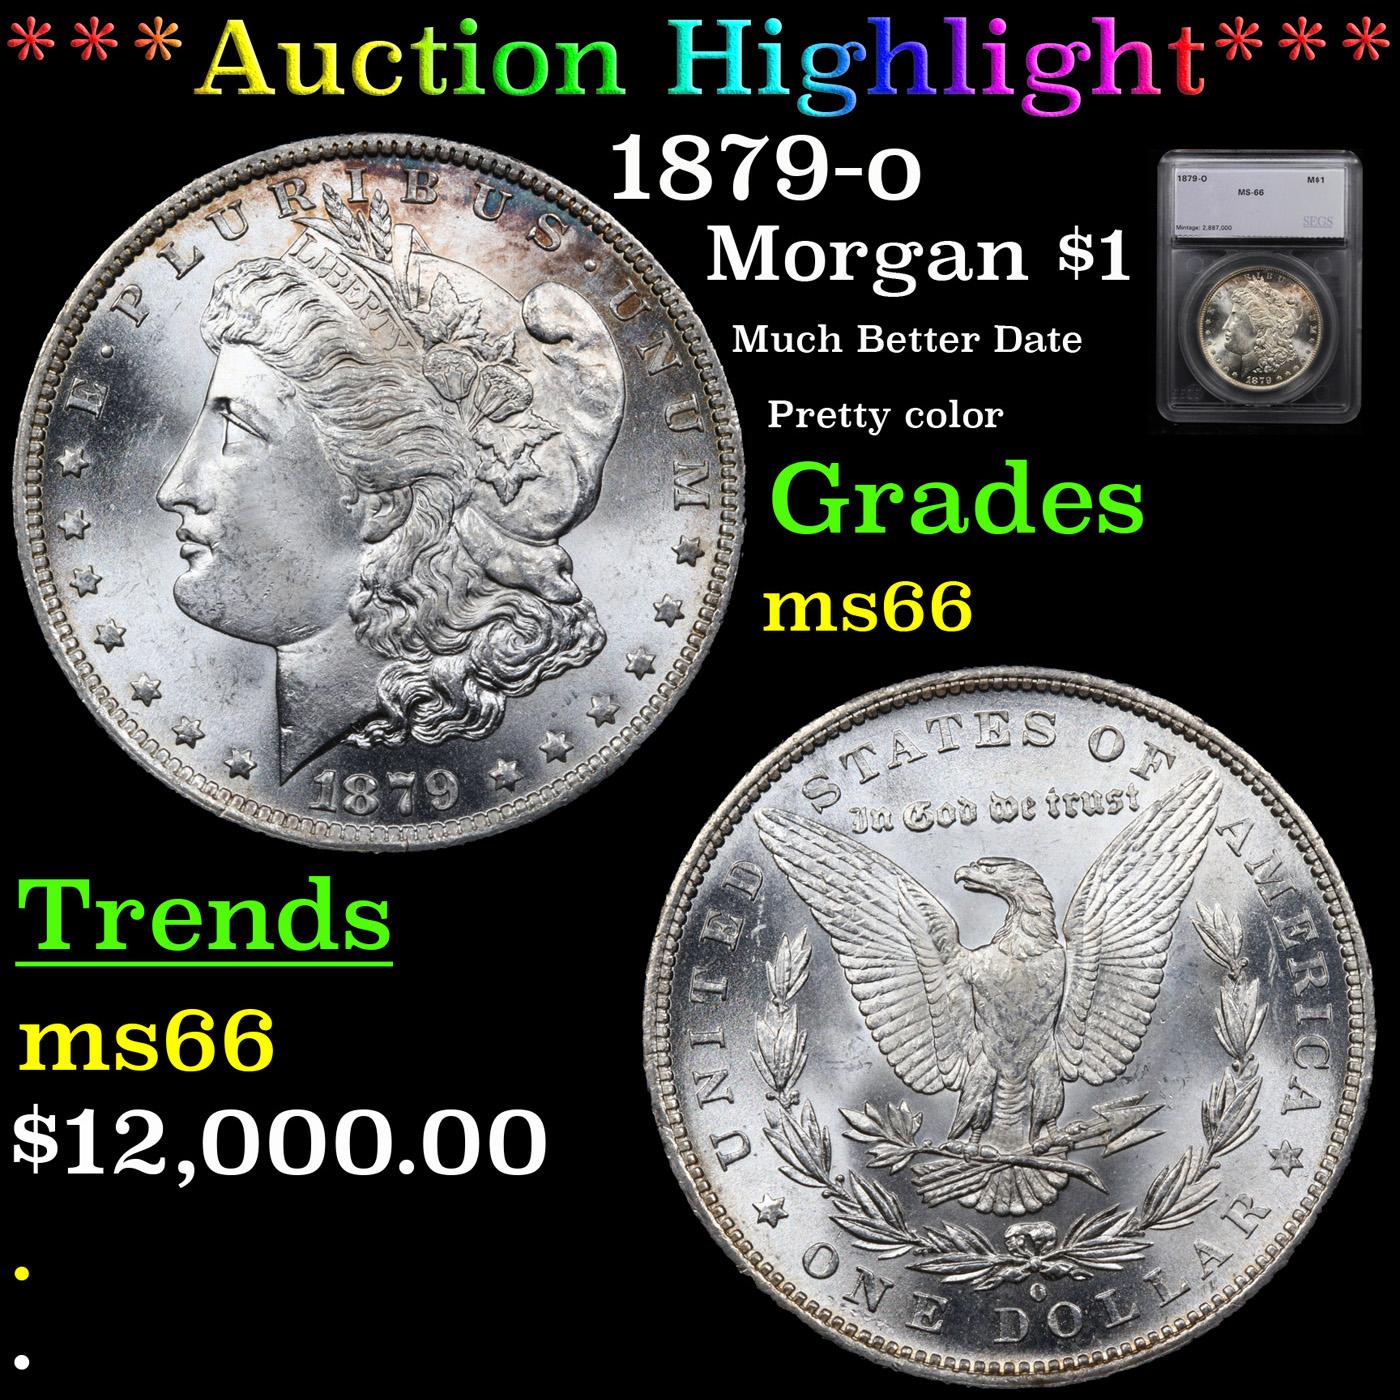 *HIGHLIGHT OF THE NIGHT* 1879-o Morgan Dollar $1 Graded ms66 By SEGS (fc)